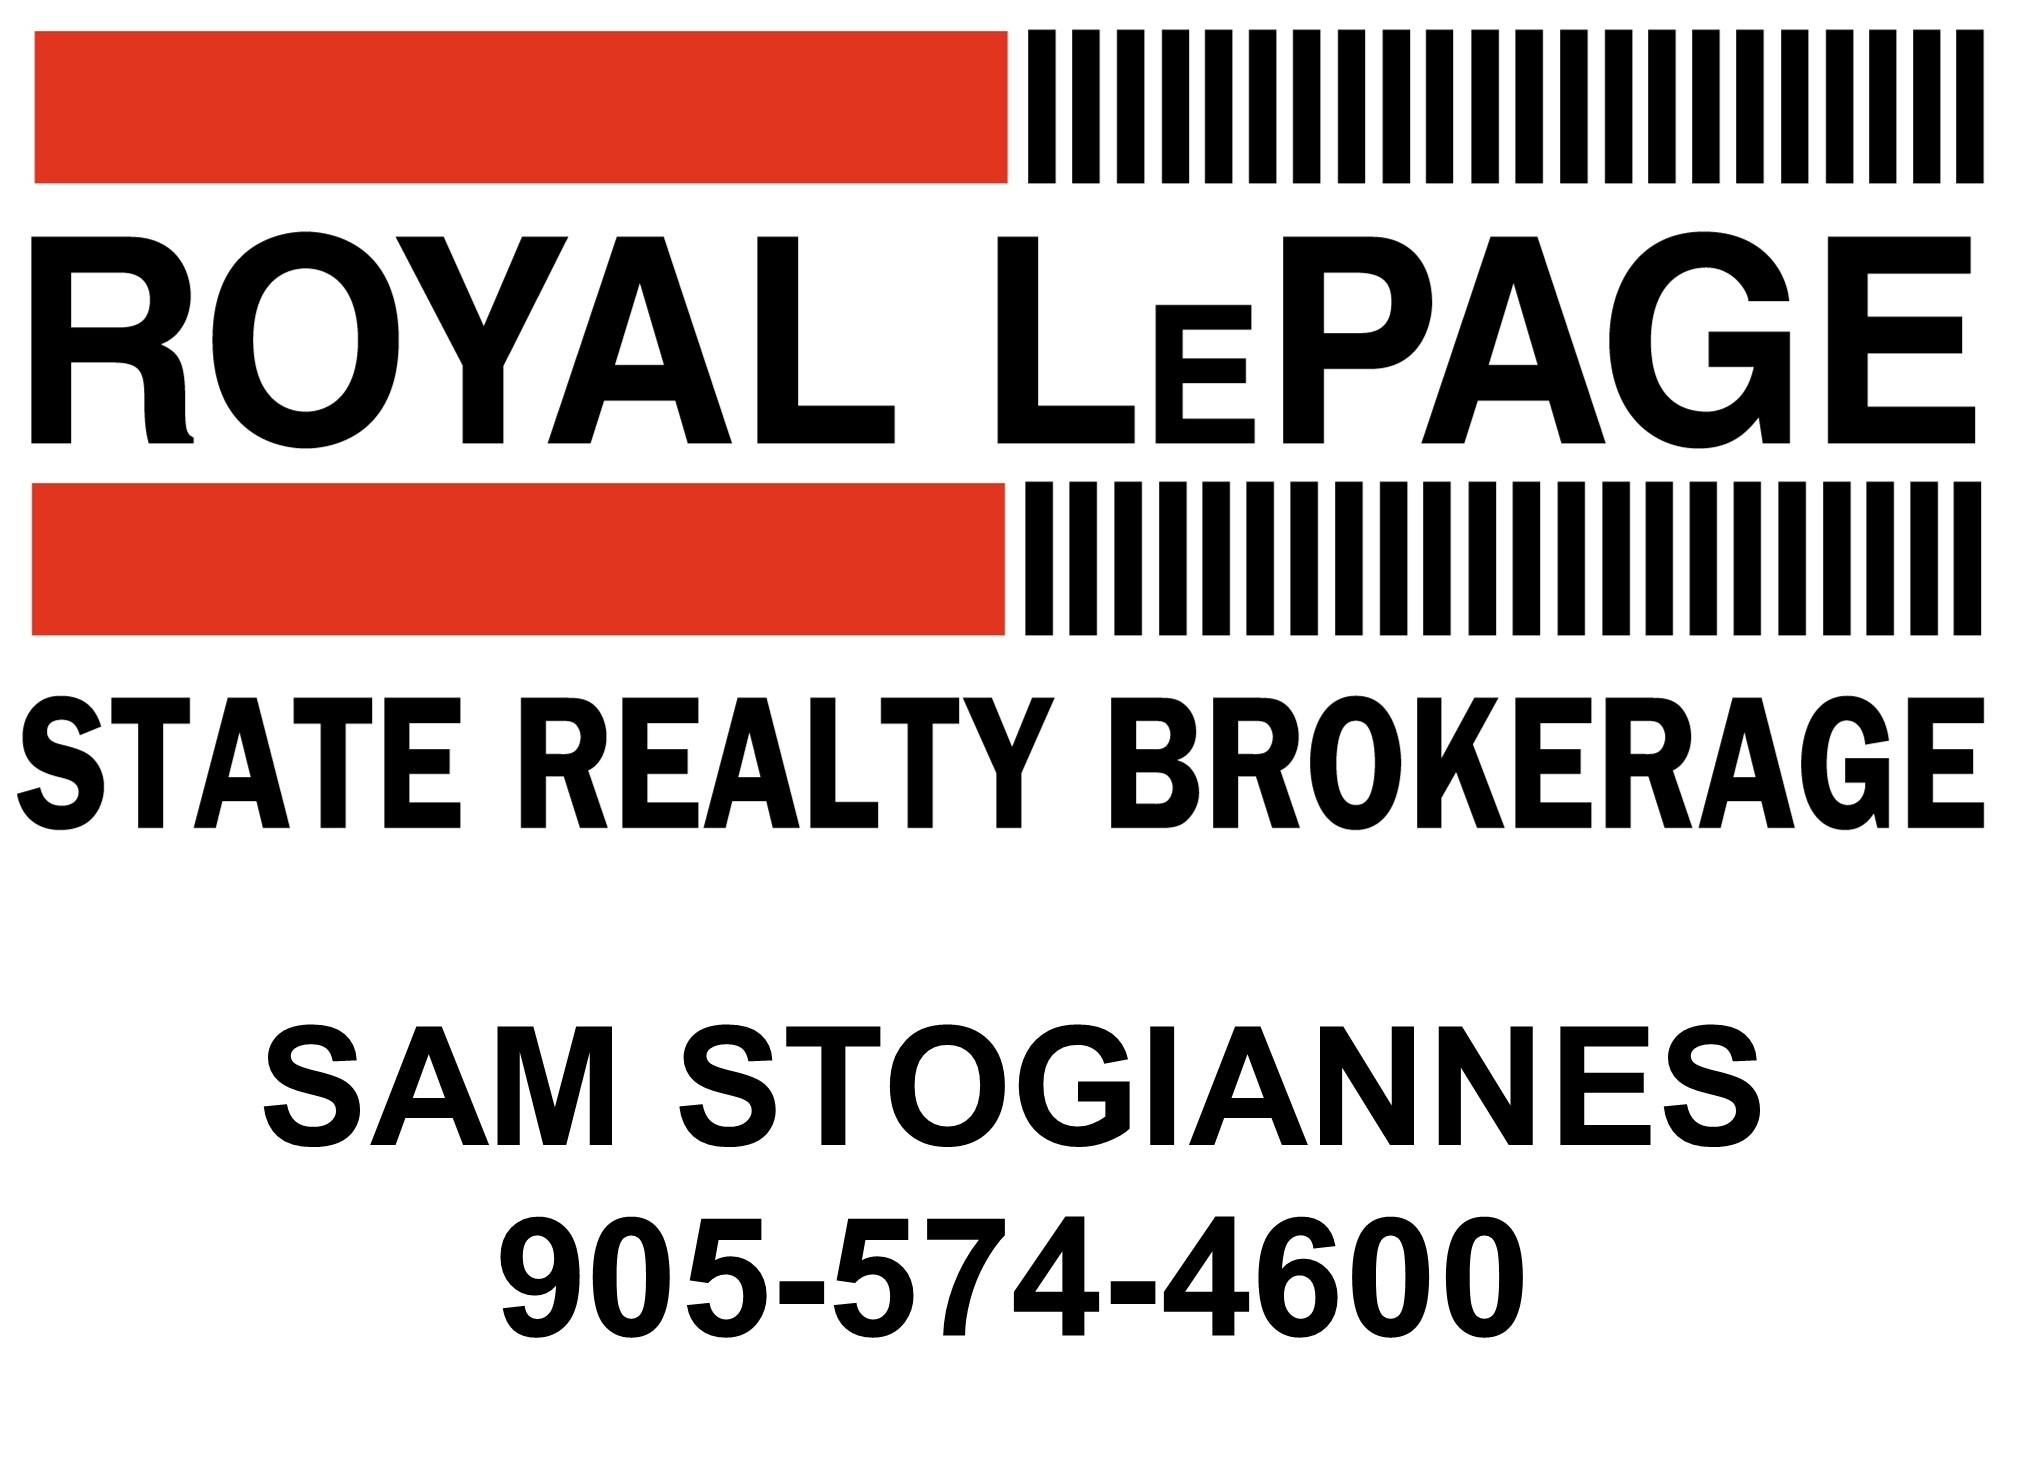 Sam Stogiannes - Royal LePage